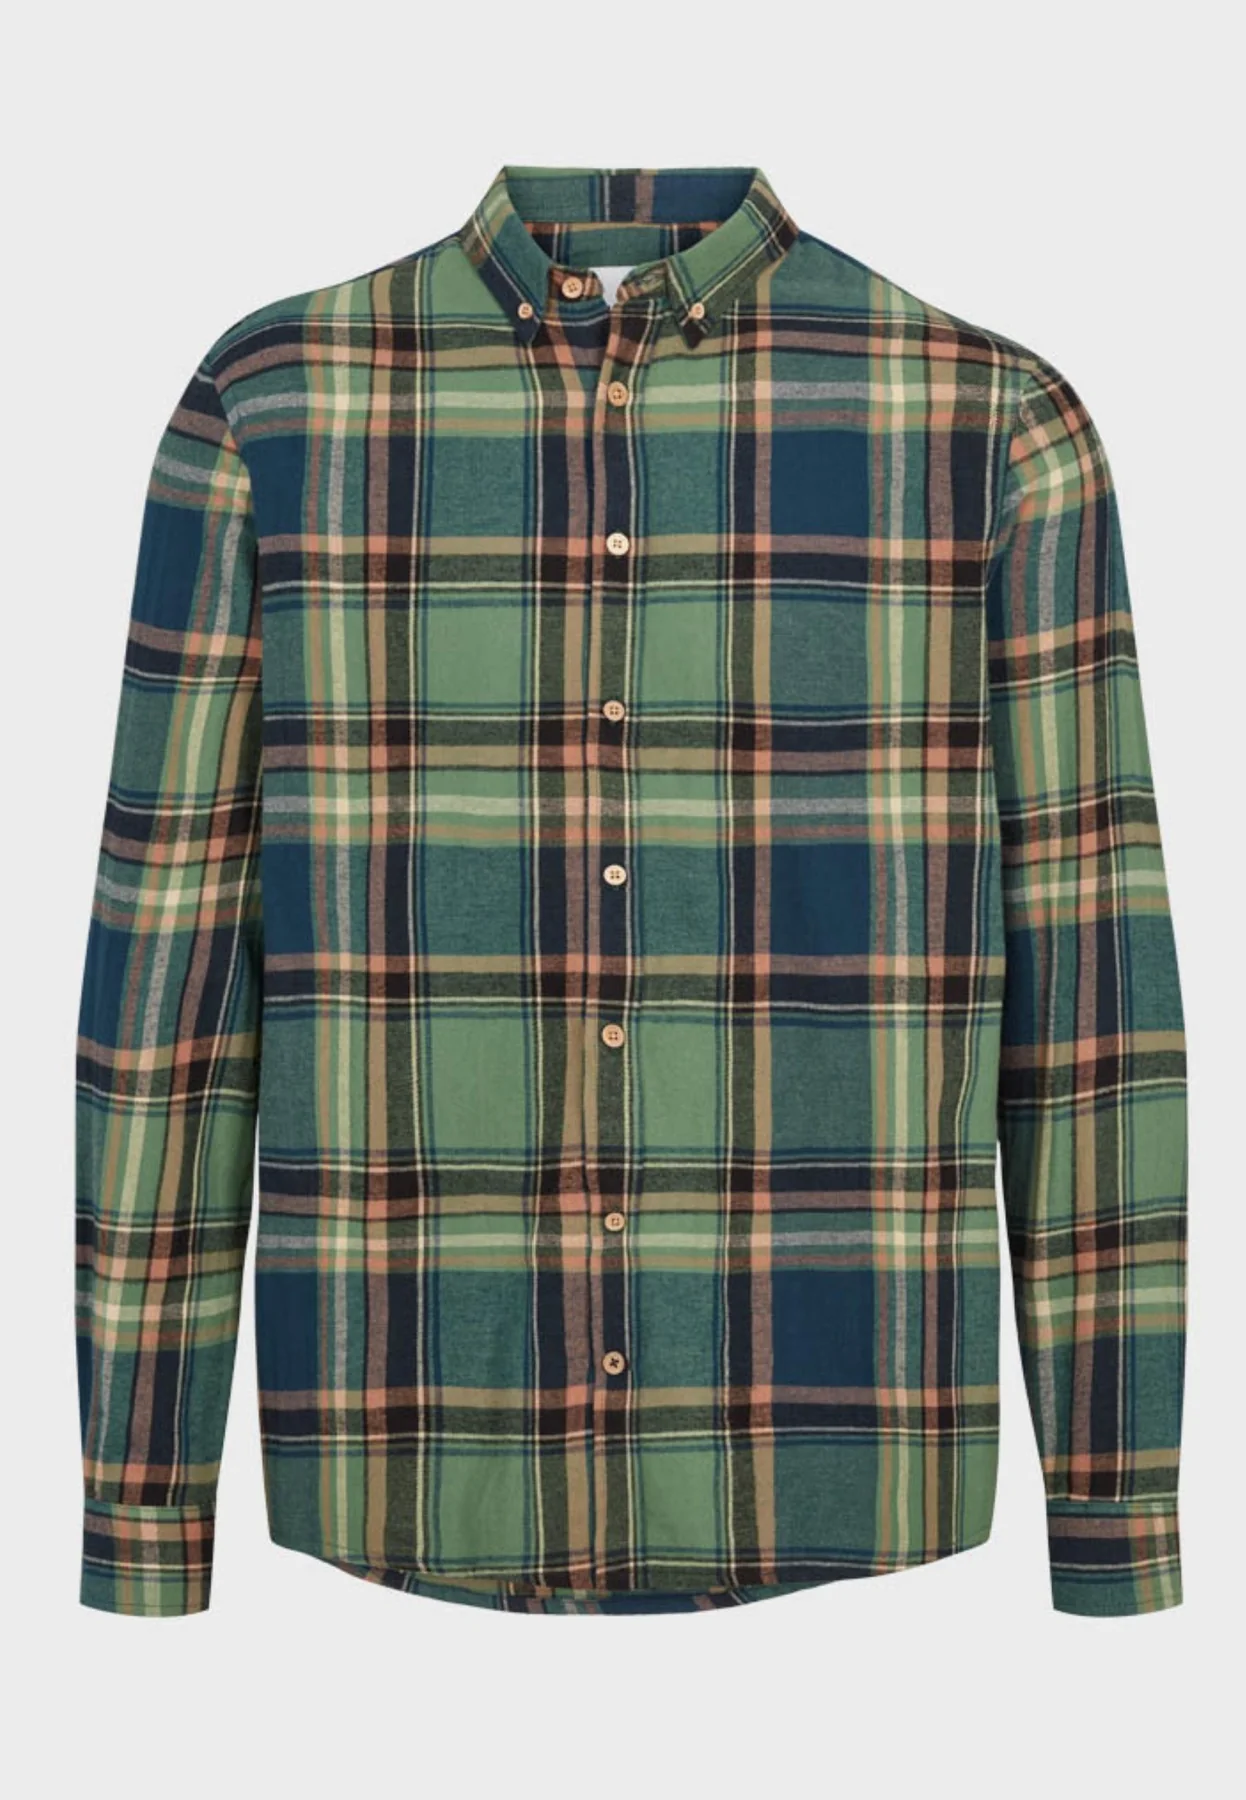 kronstadt flannel check shirt ks4206 ivy green/blue